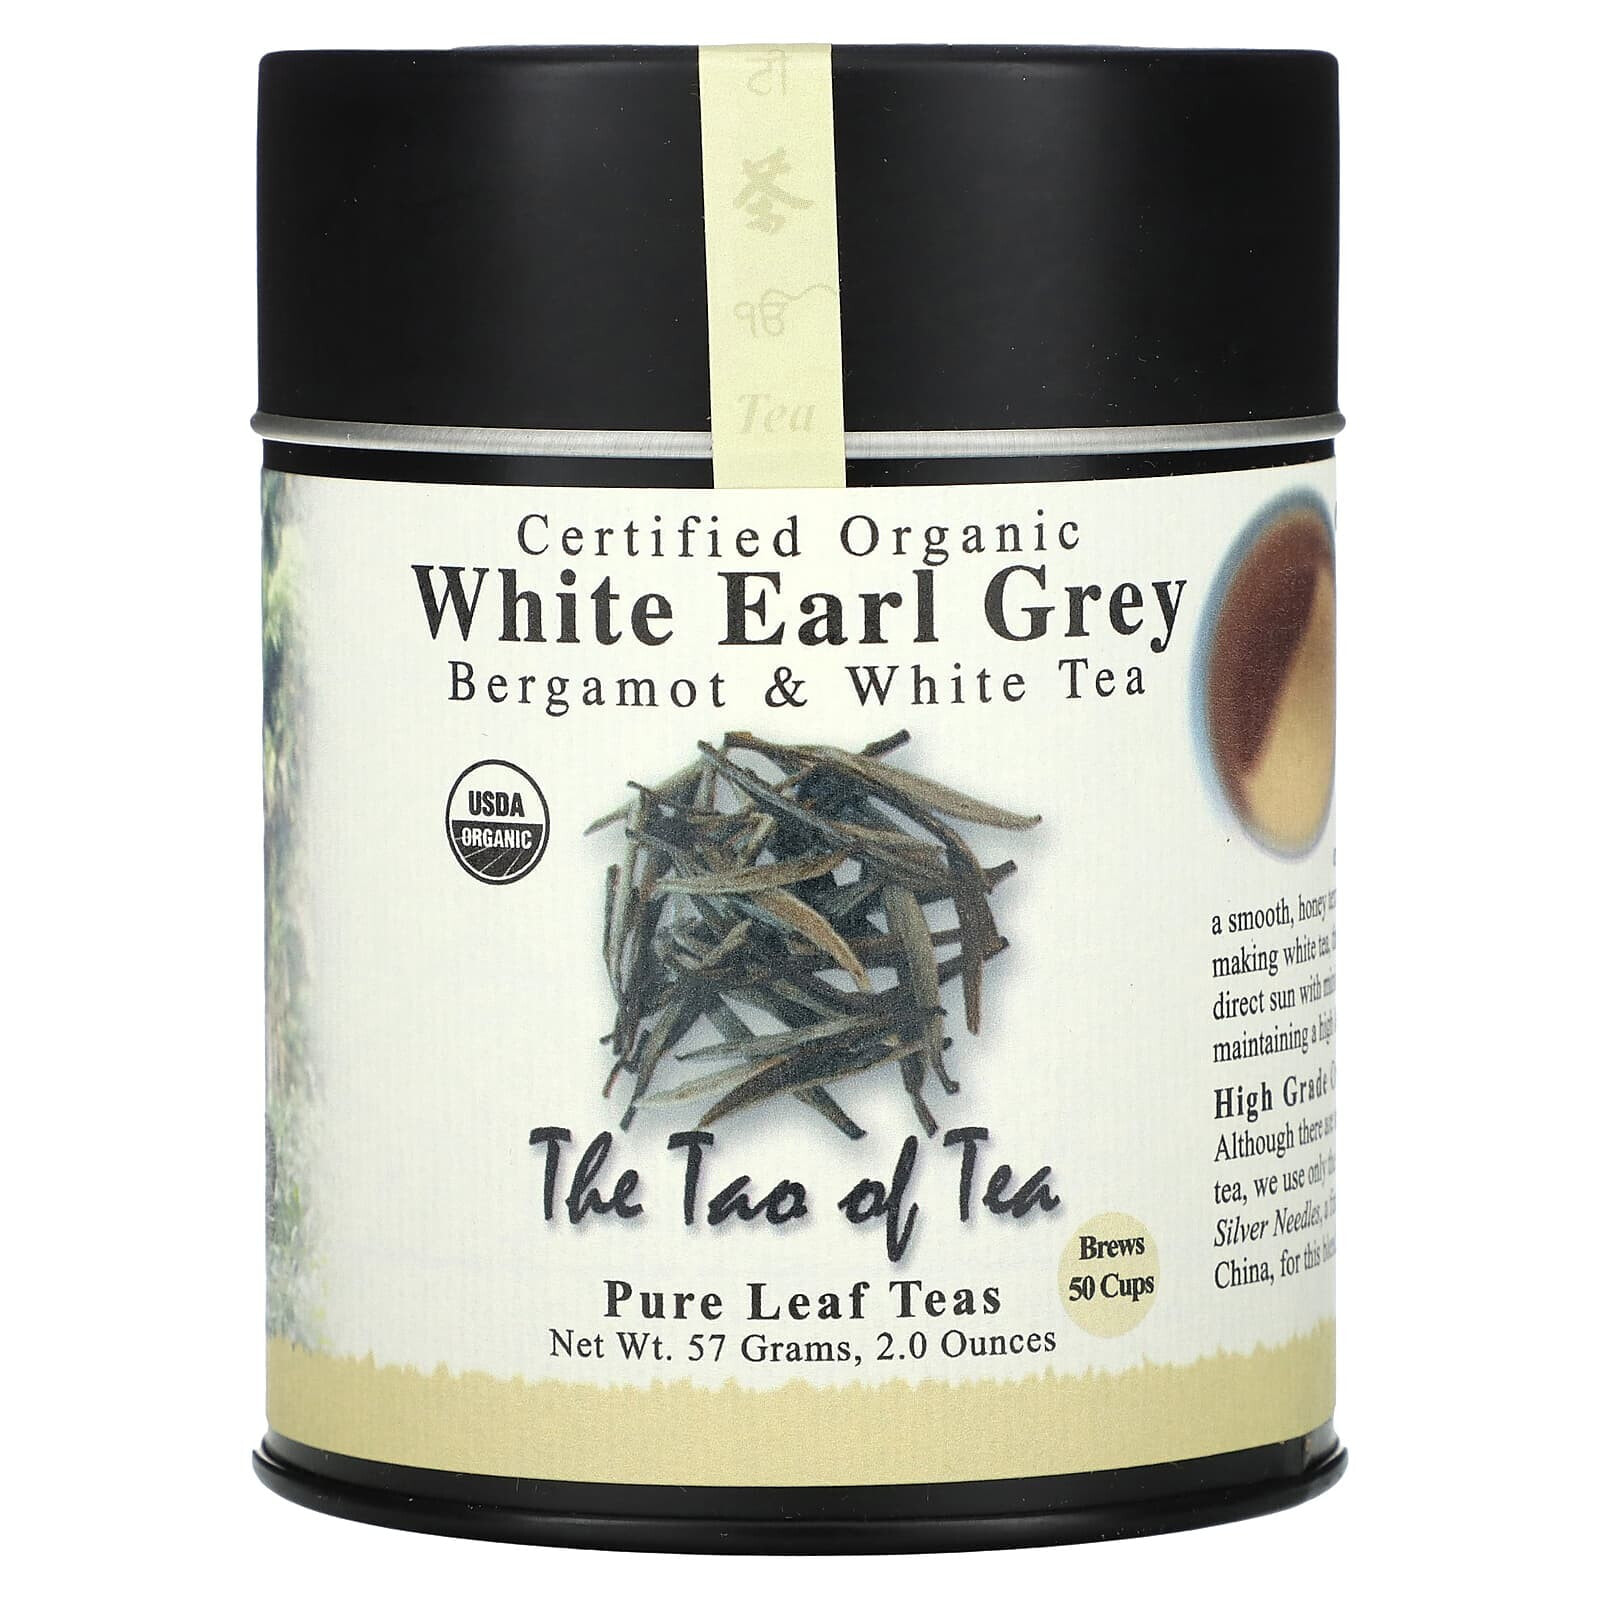 Зе Тао оф Ти, Белый чай из весенних почек, Imperial White , 1,5 ун (43 г)